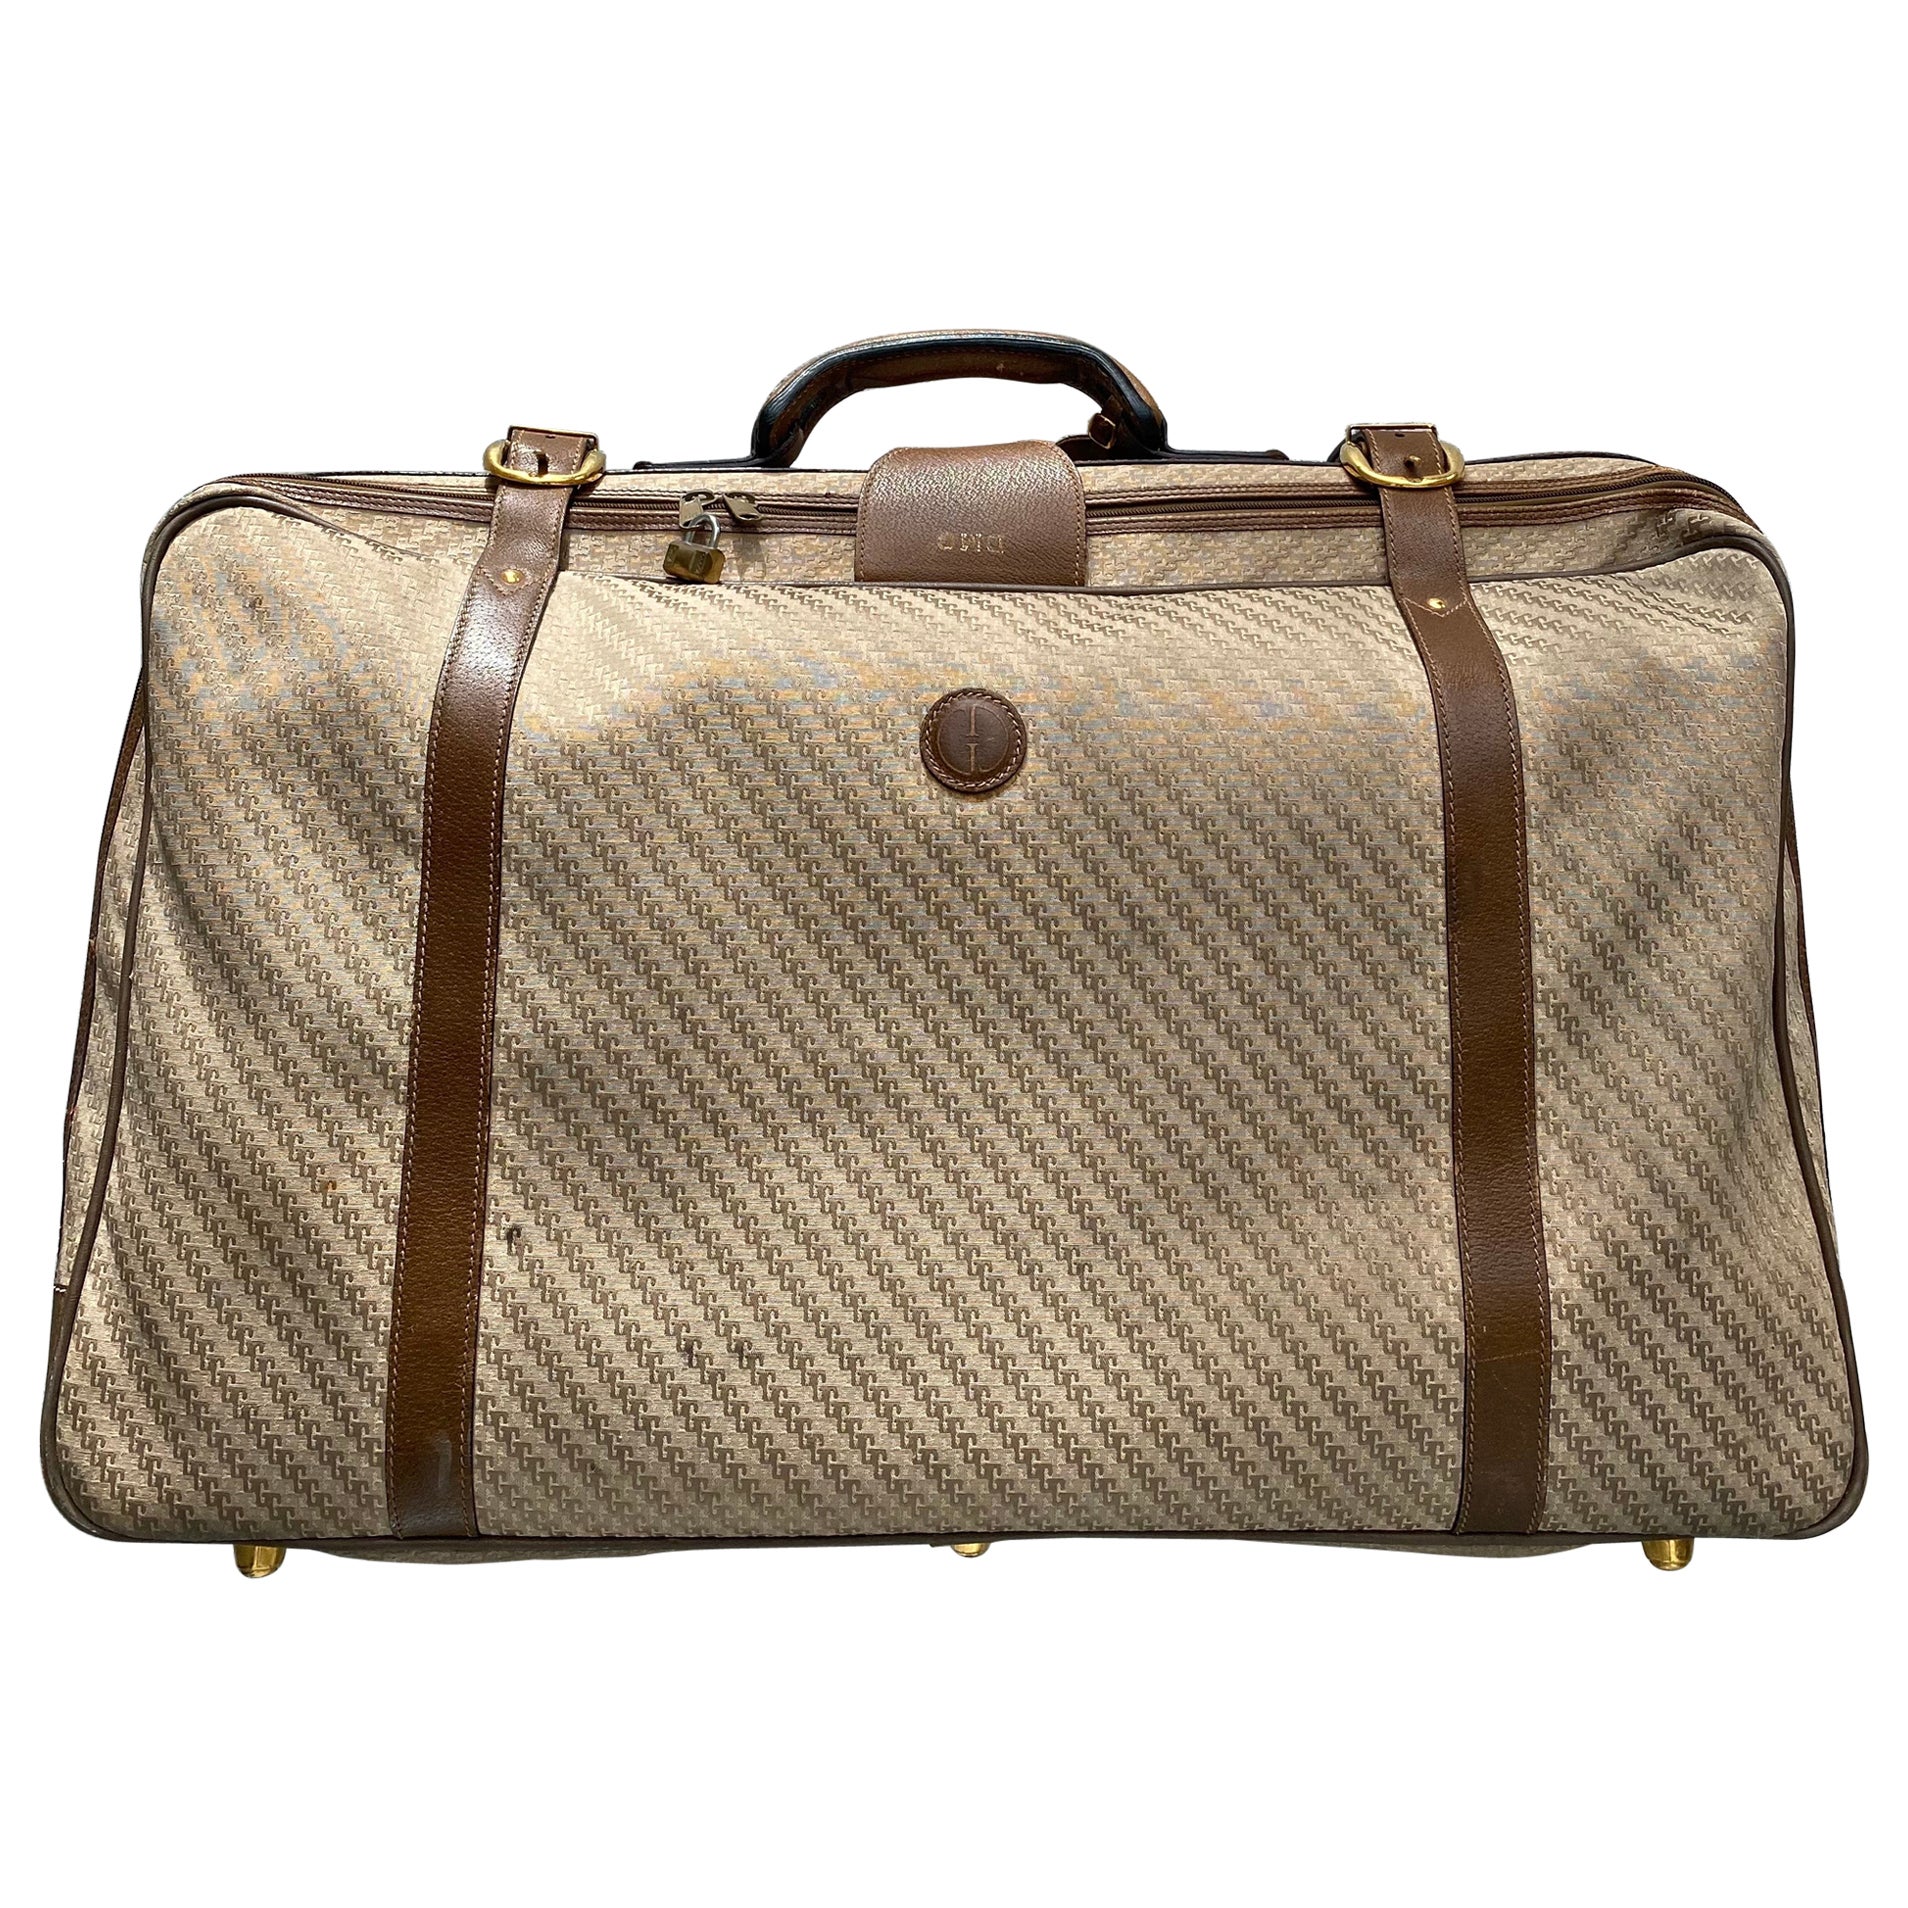 Gucci Vintage Rare GG Monogram Suitcase Travel Luggage